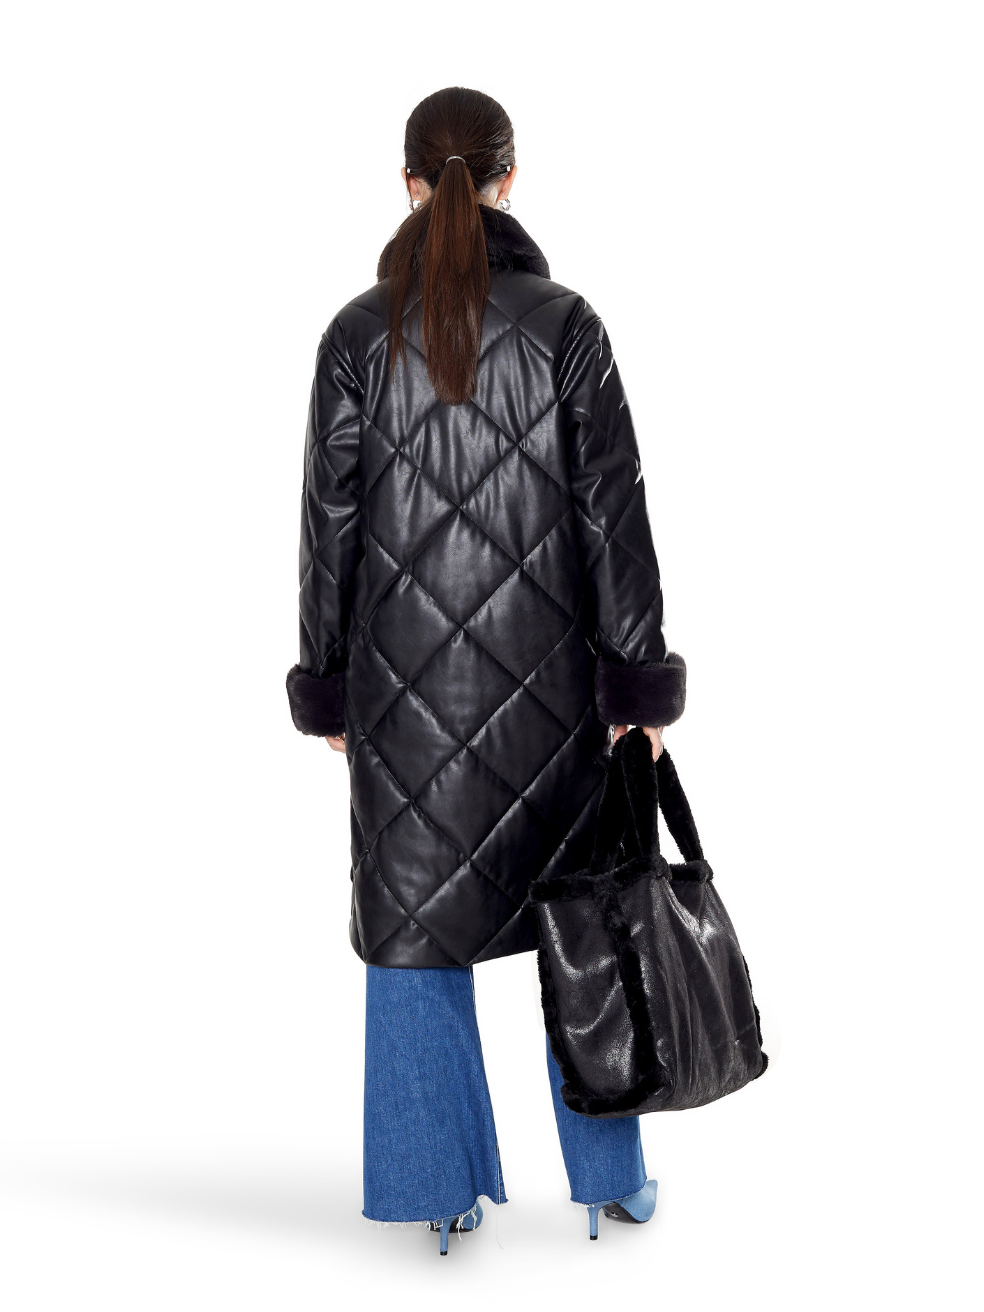 Kym Stormi Black Slow Fashion Outerwear Vegan Leather Fur Matte Quilted Long Coat